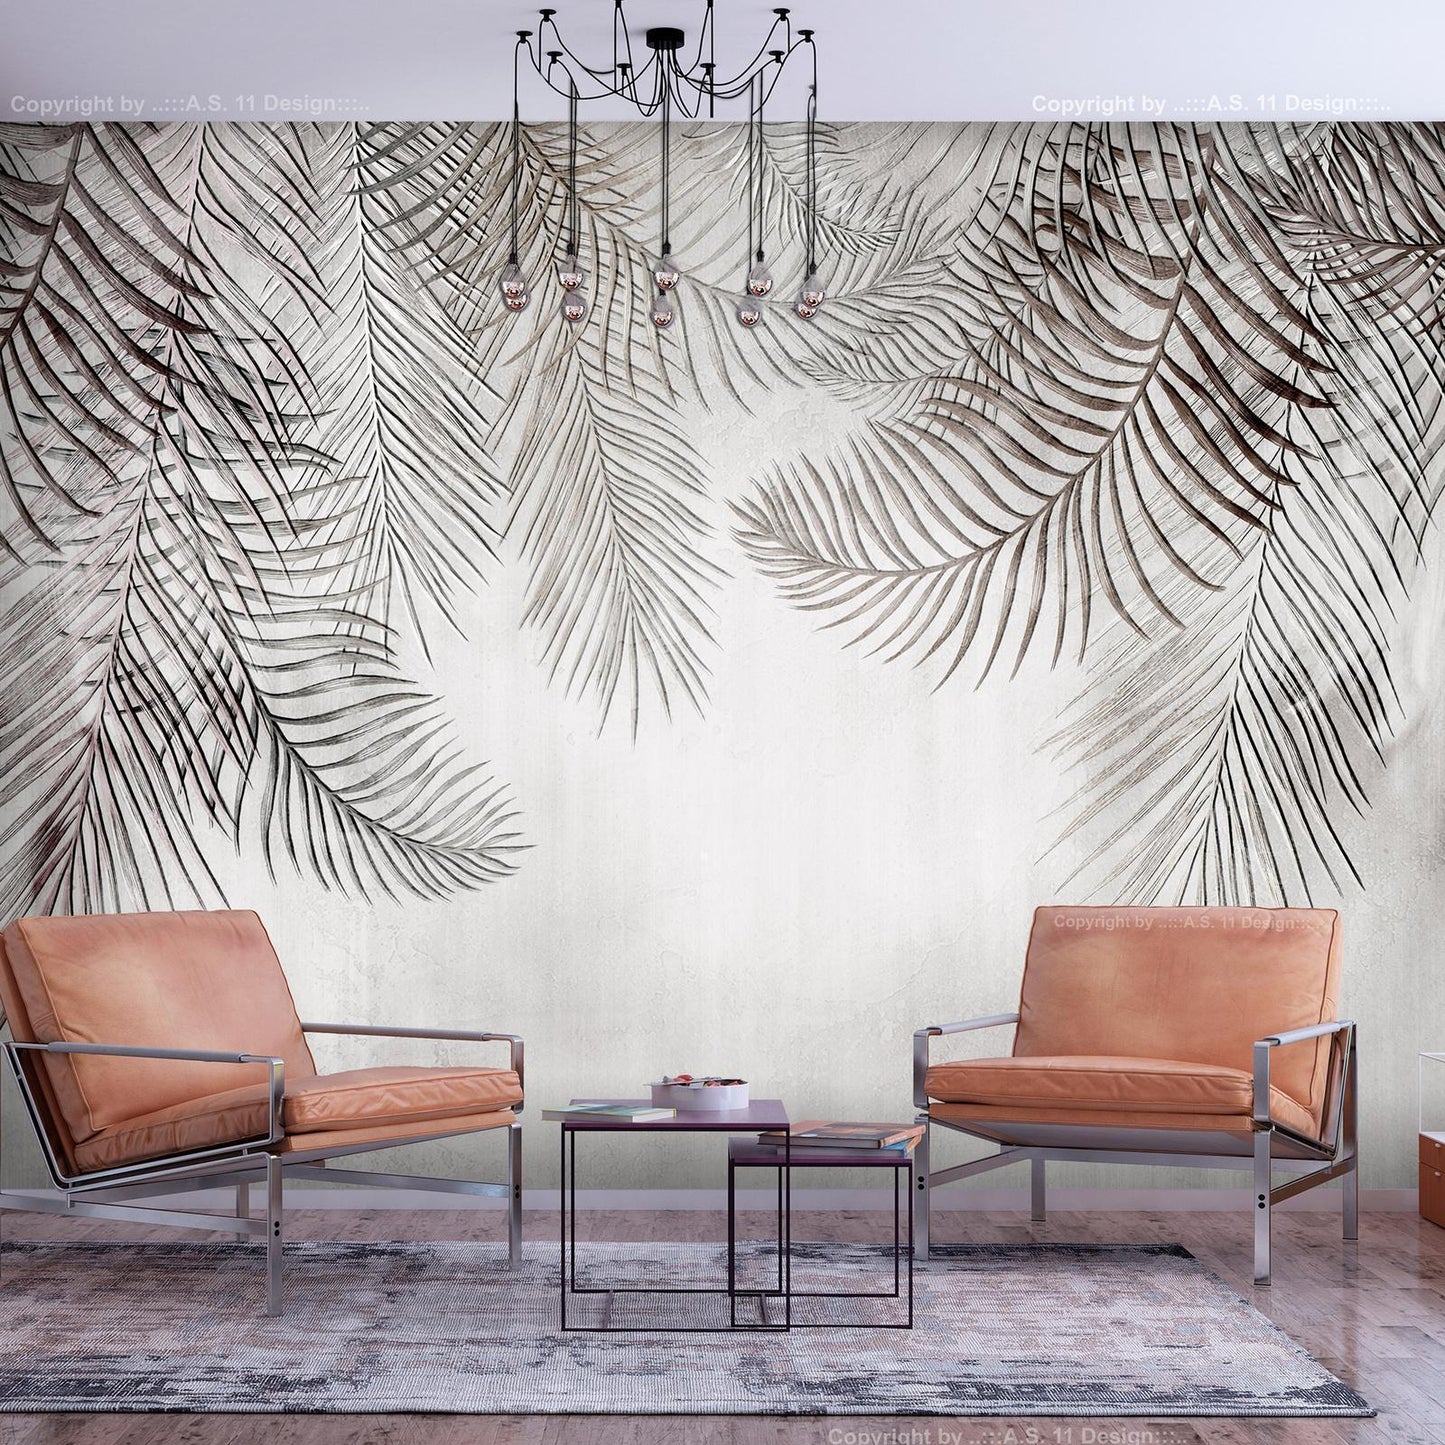 Self-adhesive photo wallpaper - Night Palm Trees